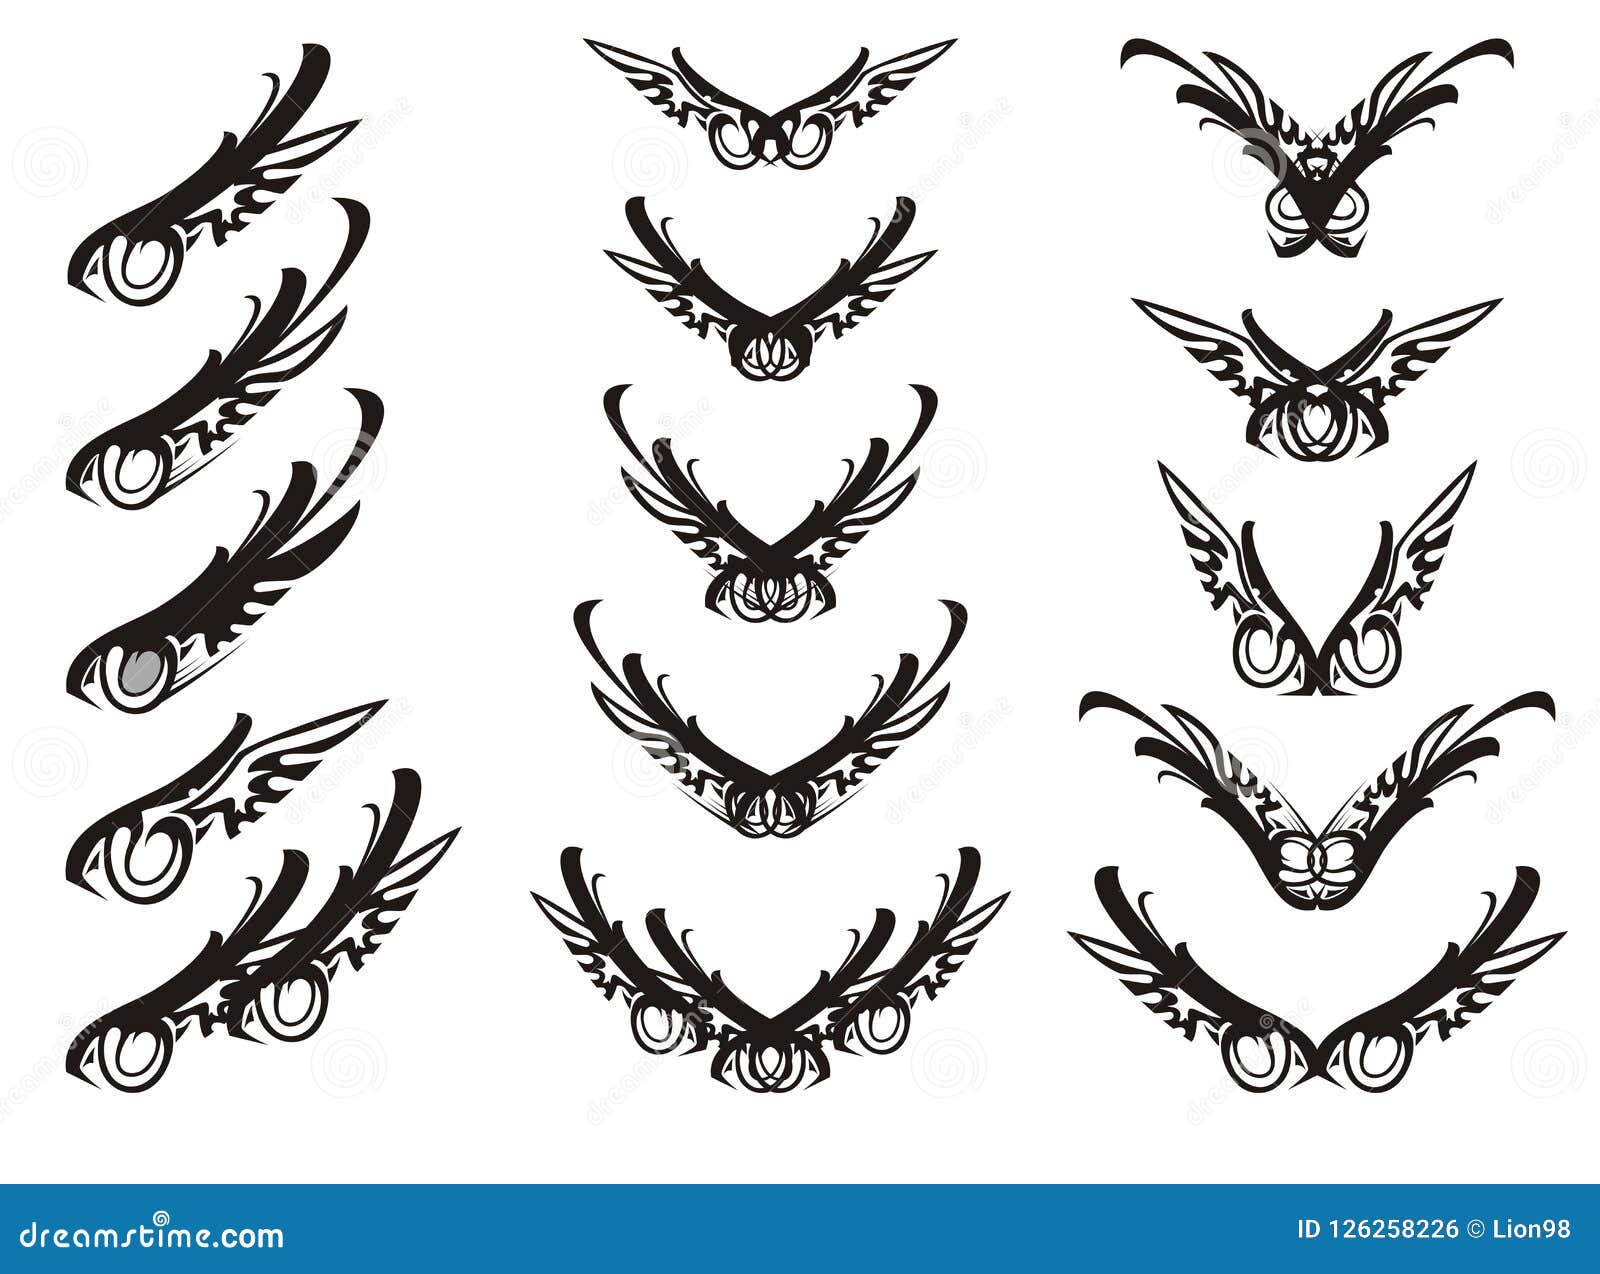 Avanti Tattoo - Eagle eye...badass piece by Curtis from... | Facebook